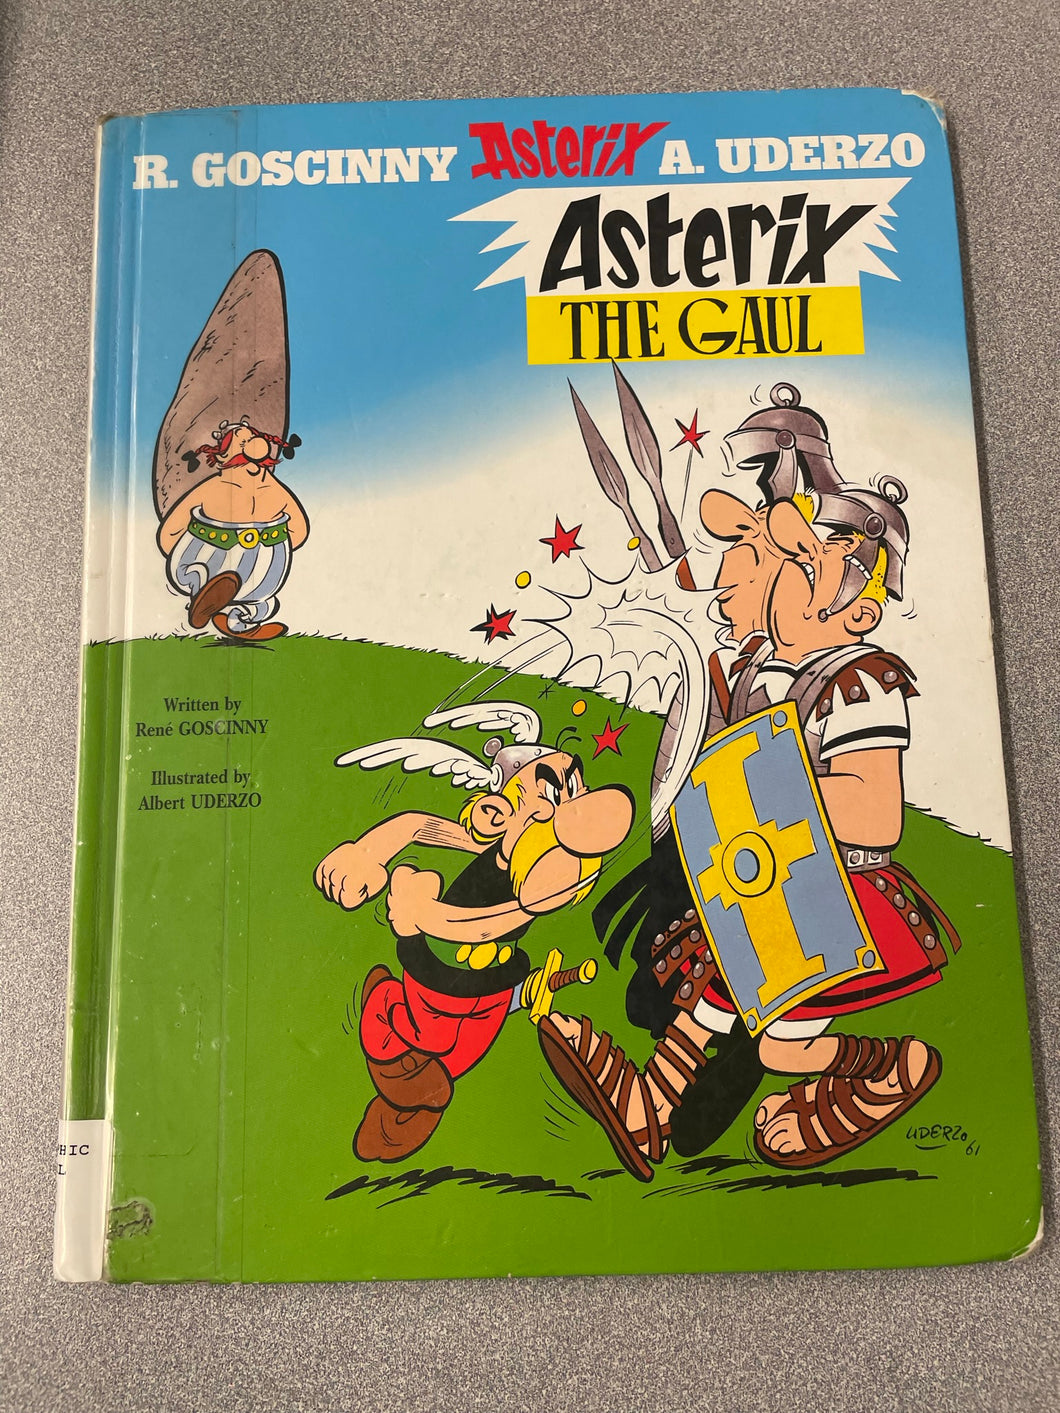 Asterix the Gaul, Rene Goscinny and Albert Uderzo1961 GN